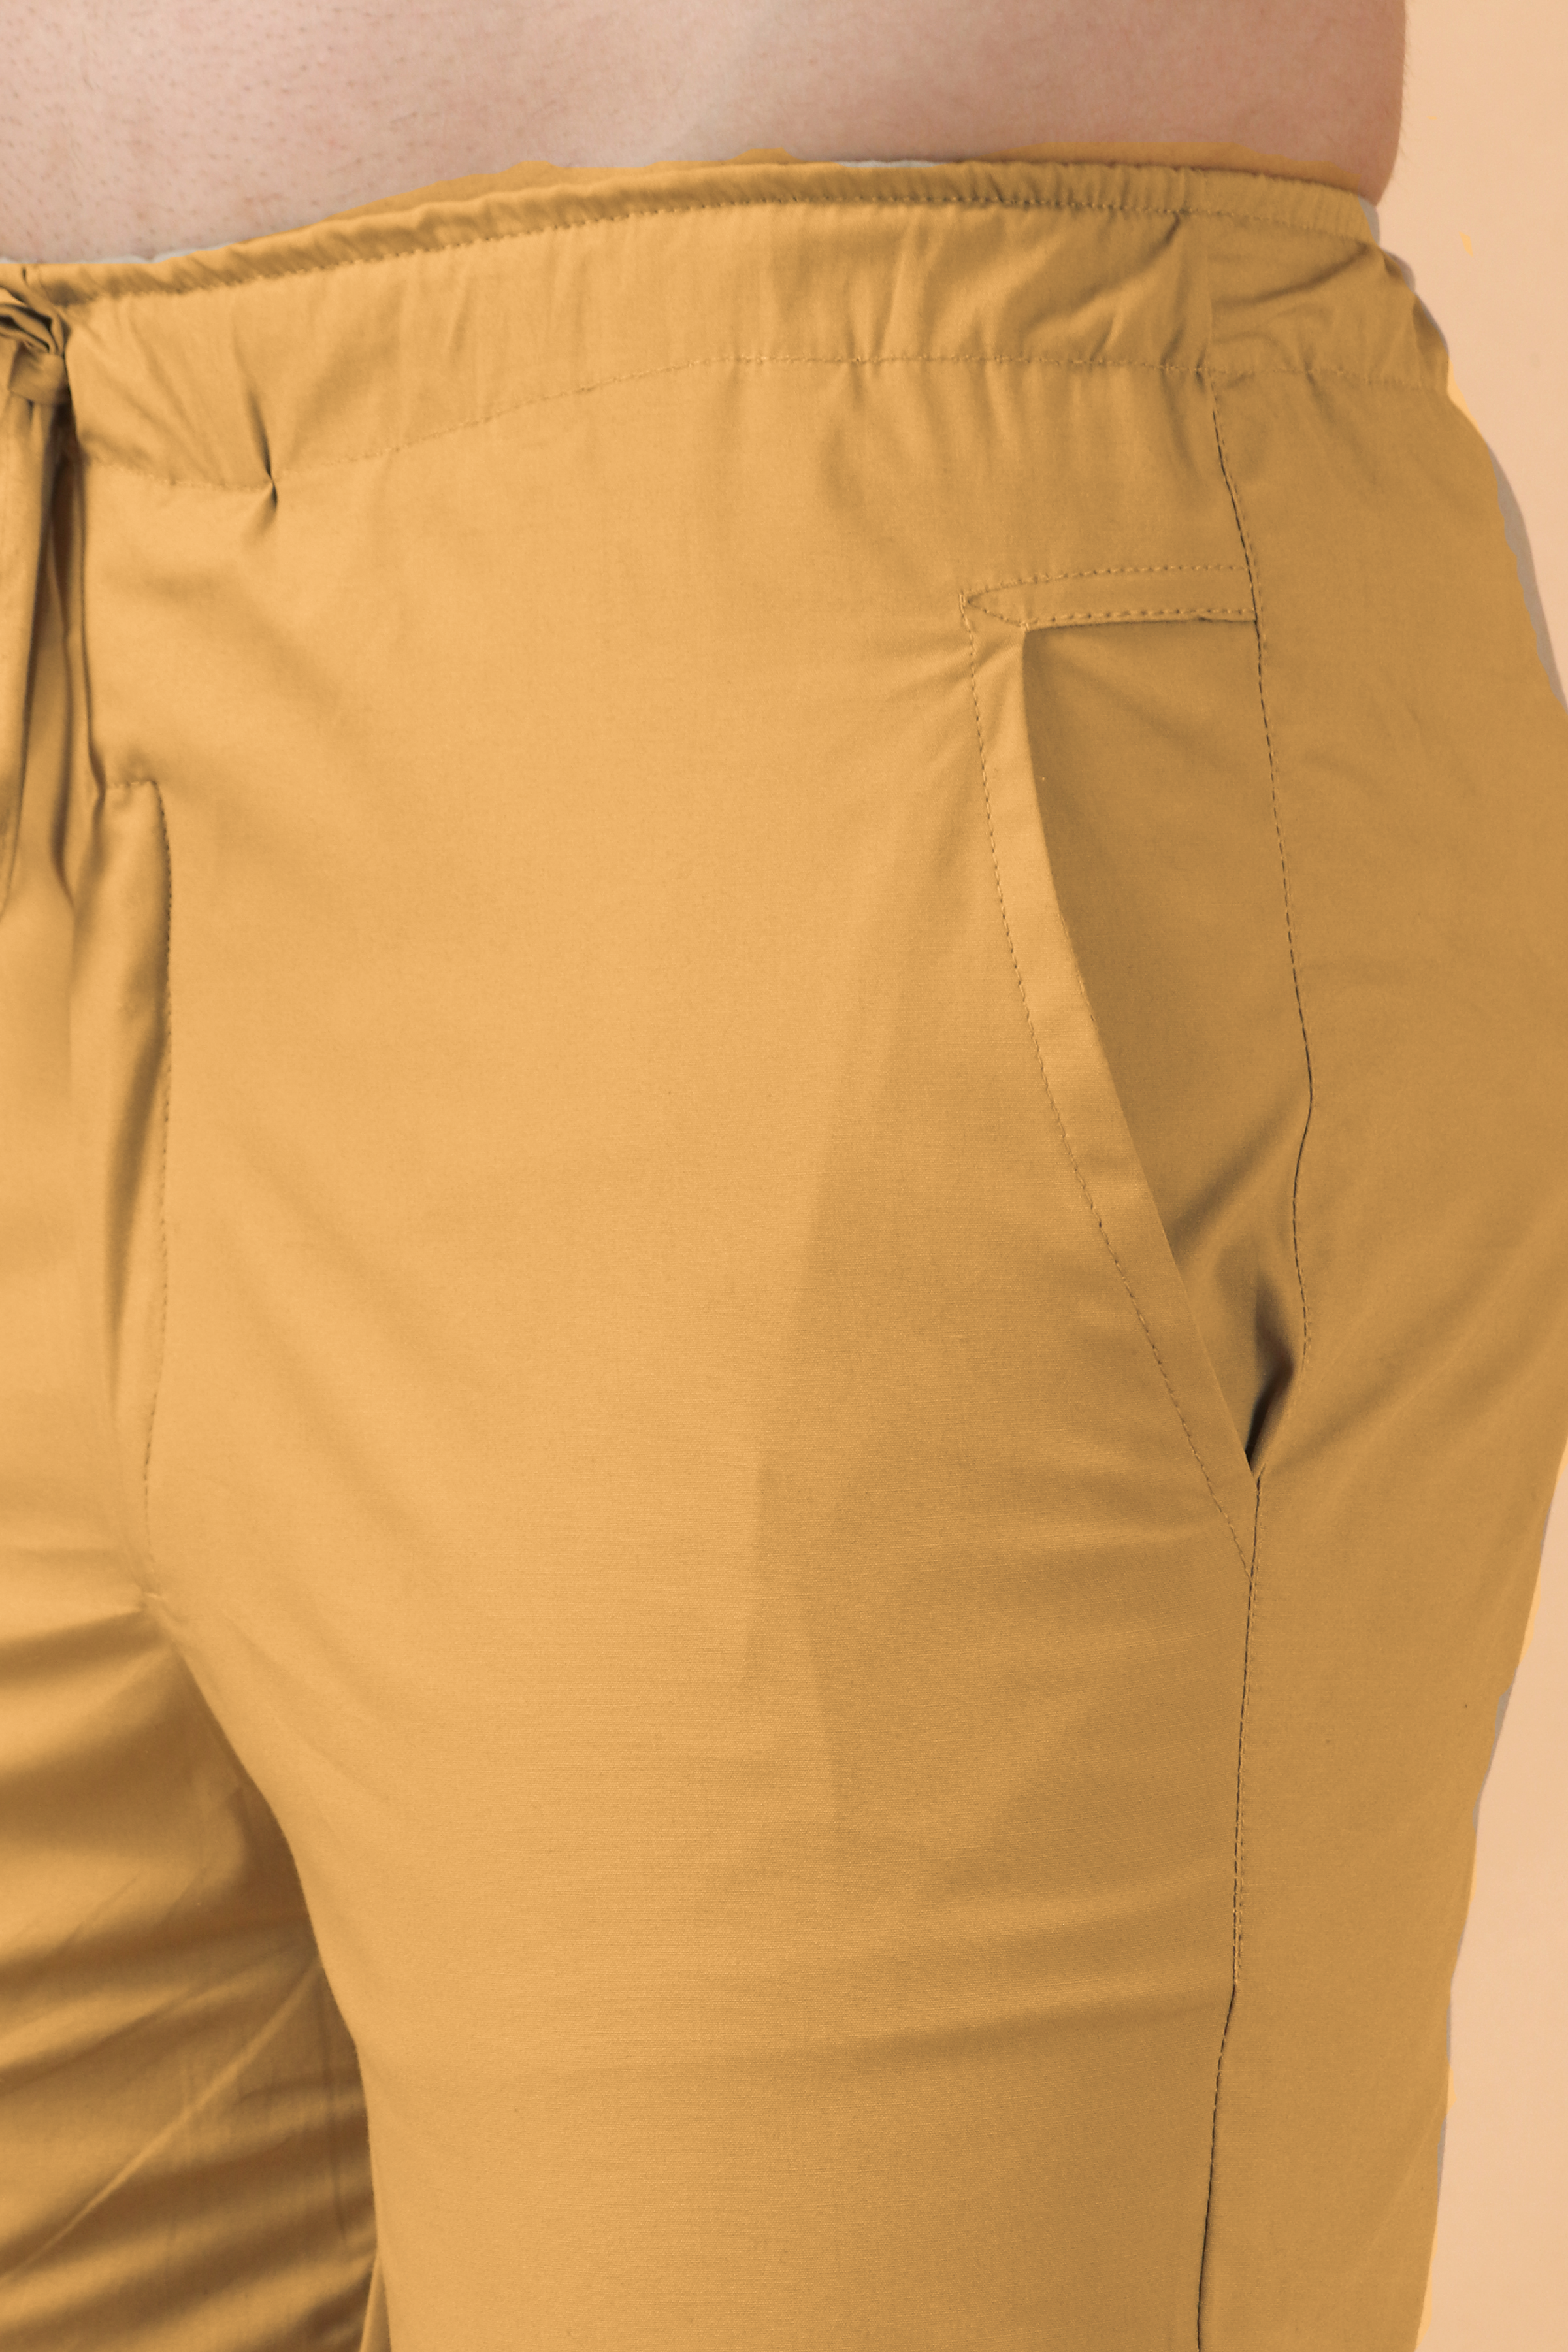 Buy Stretchable Plus Size Cargo Pants  Big Size Cargo Pants  Apella